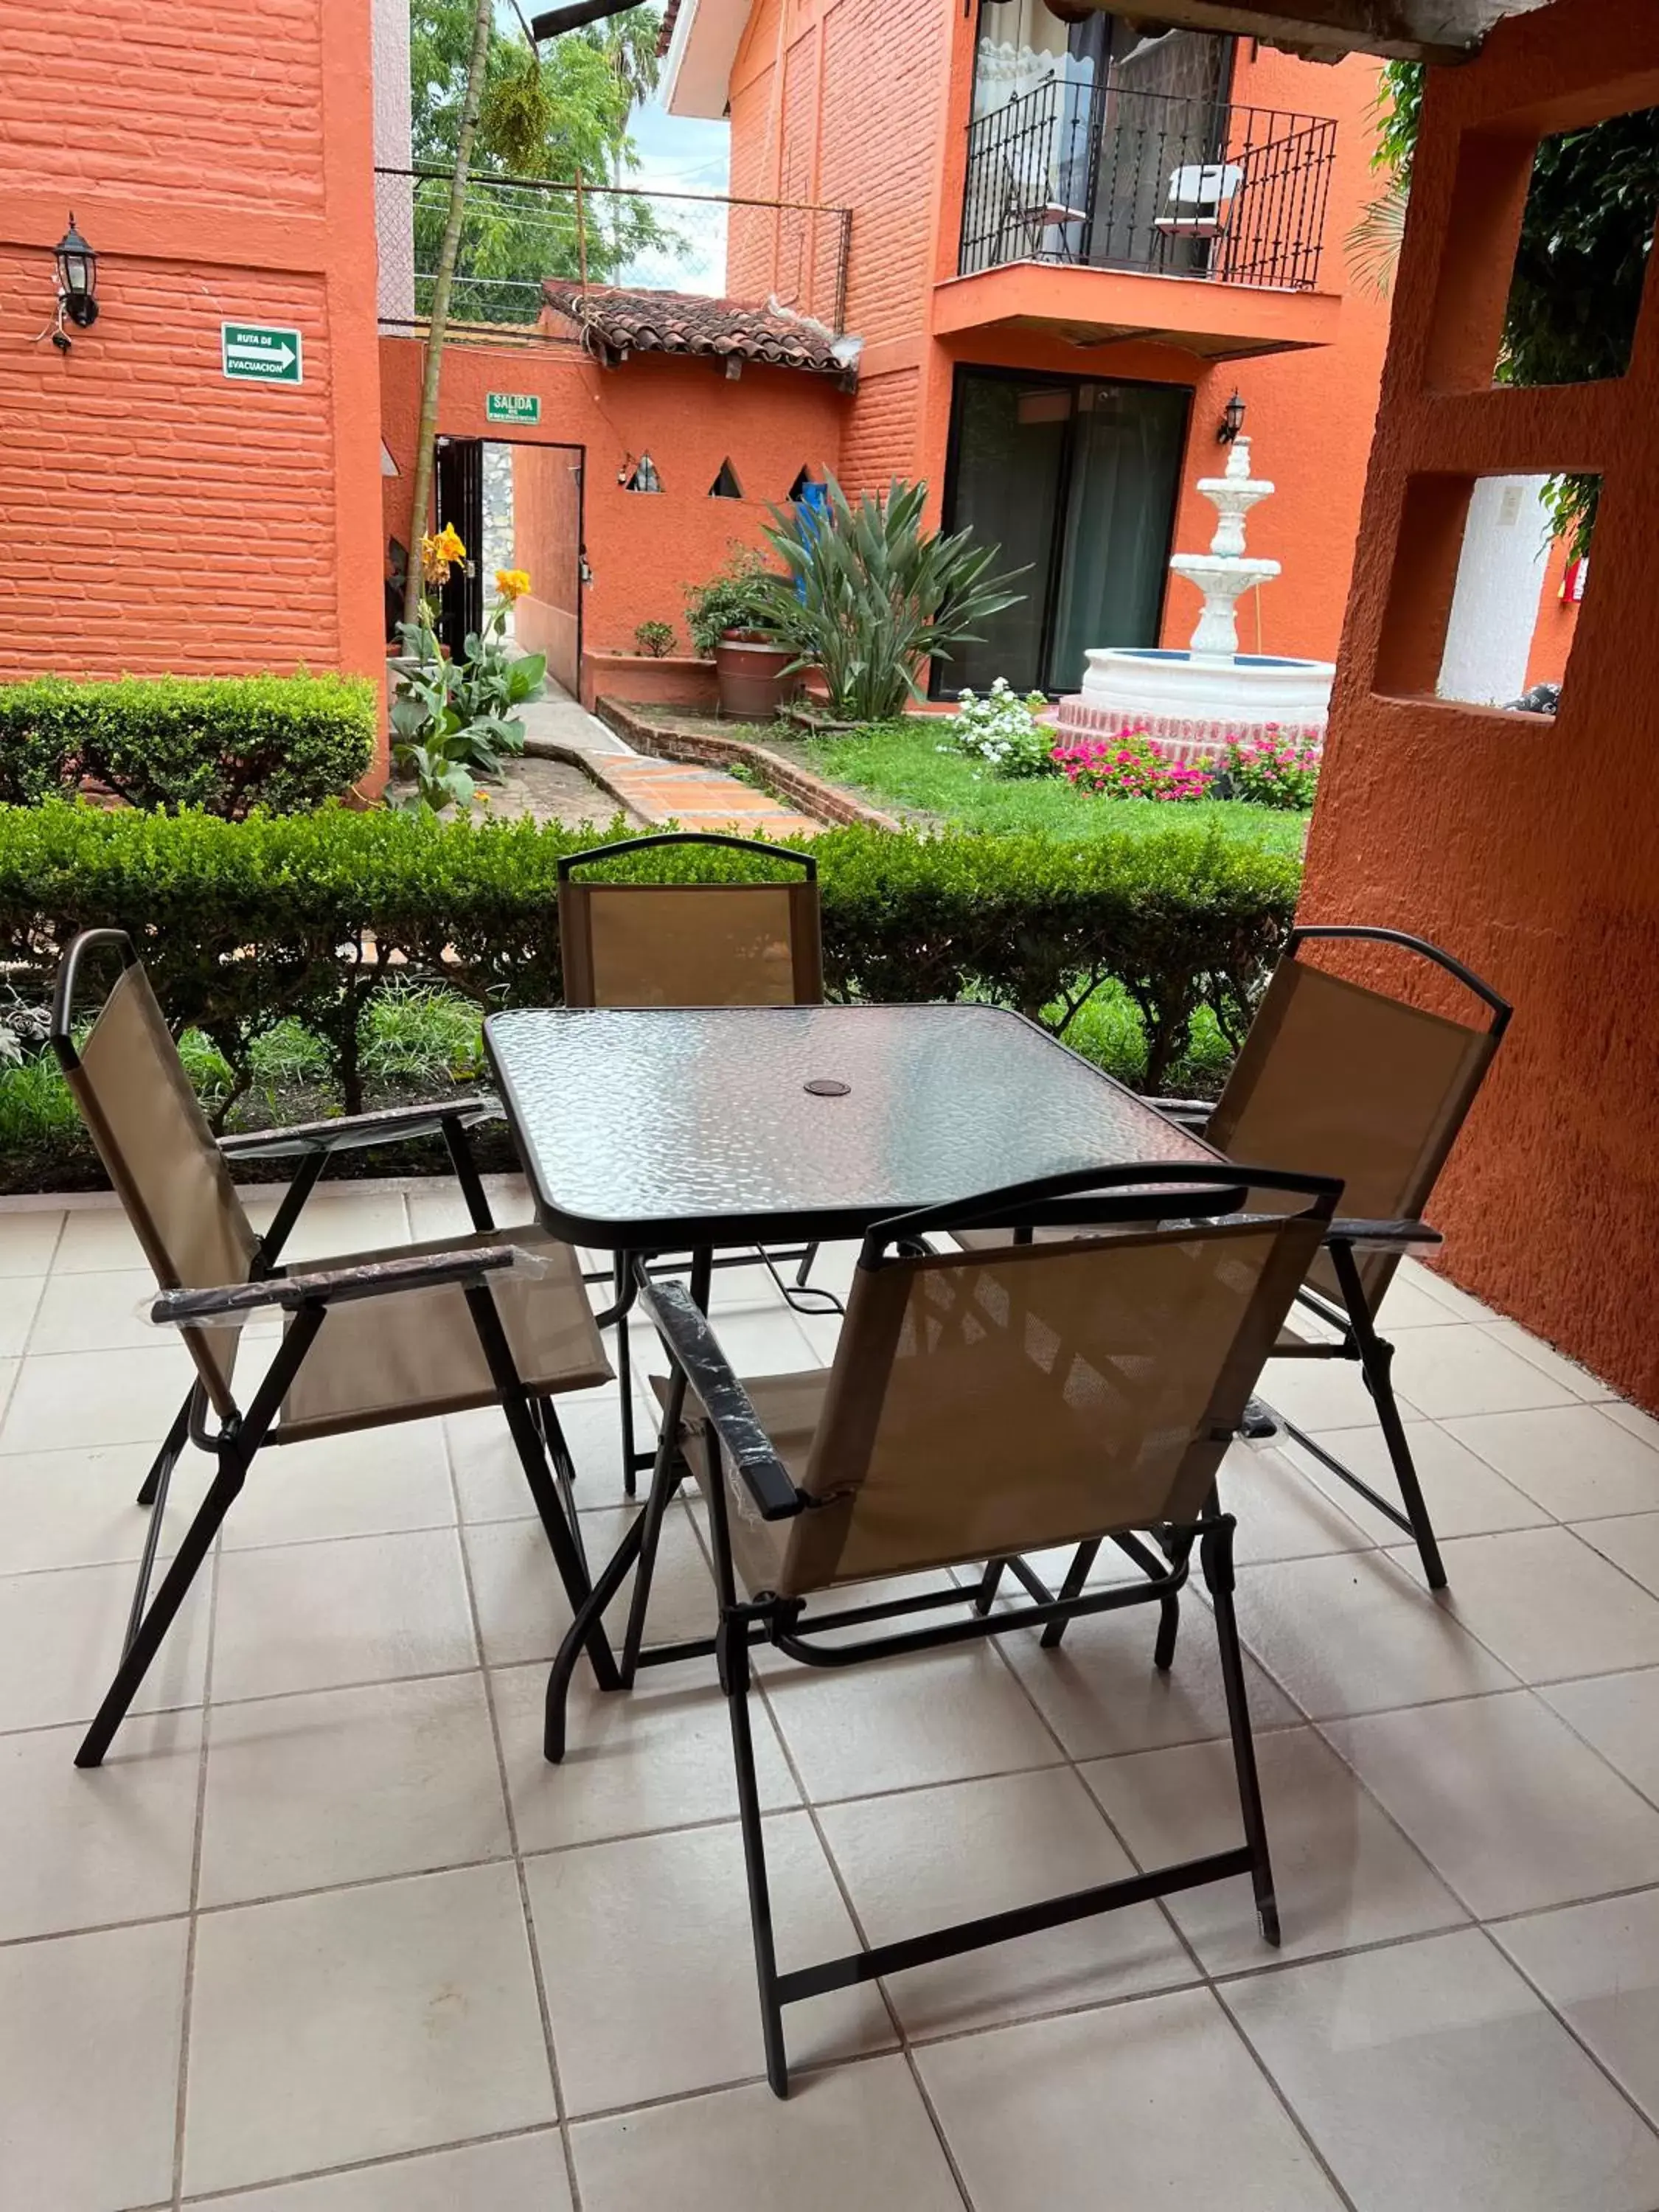 Balcony/Terrace in Hotel Villas Ajijic, Ajijic Chapala Jalisco